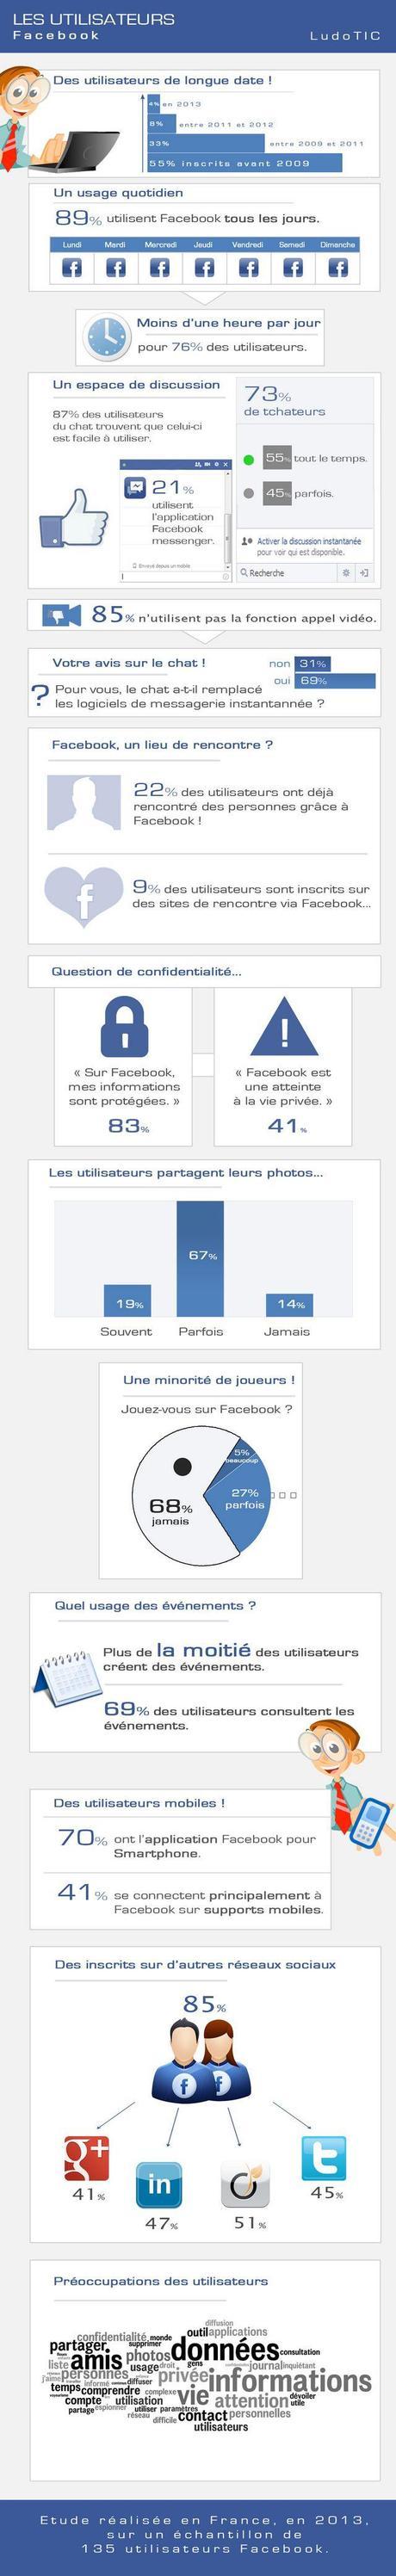 Utilisateurs de Facebook en France en 2013